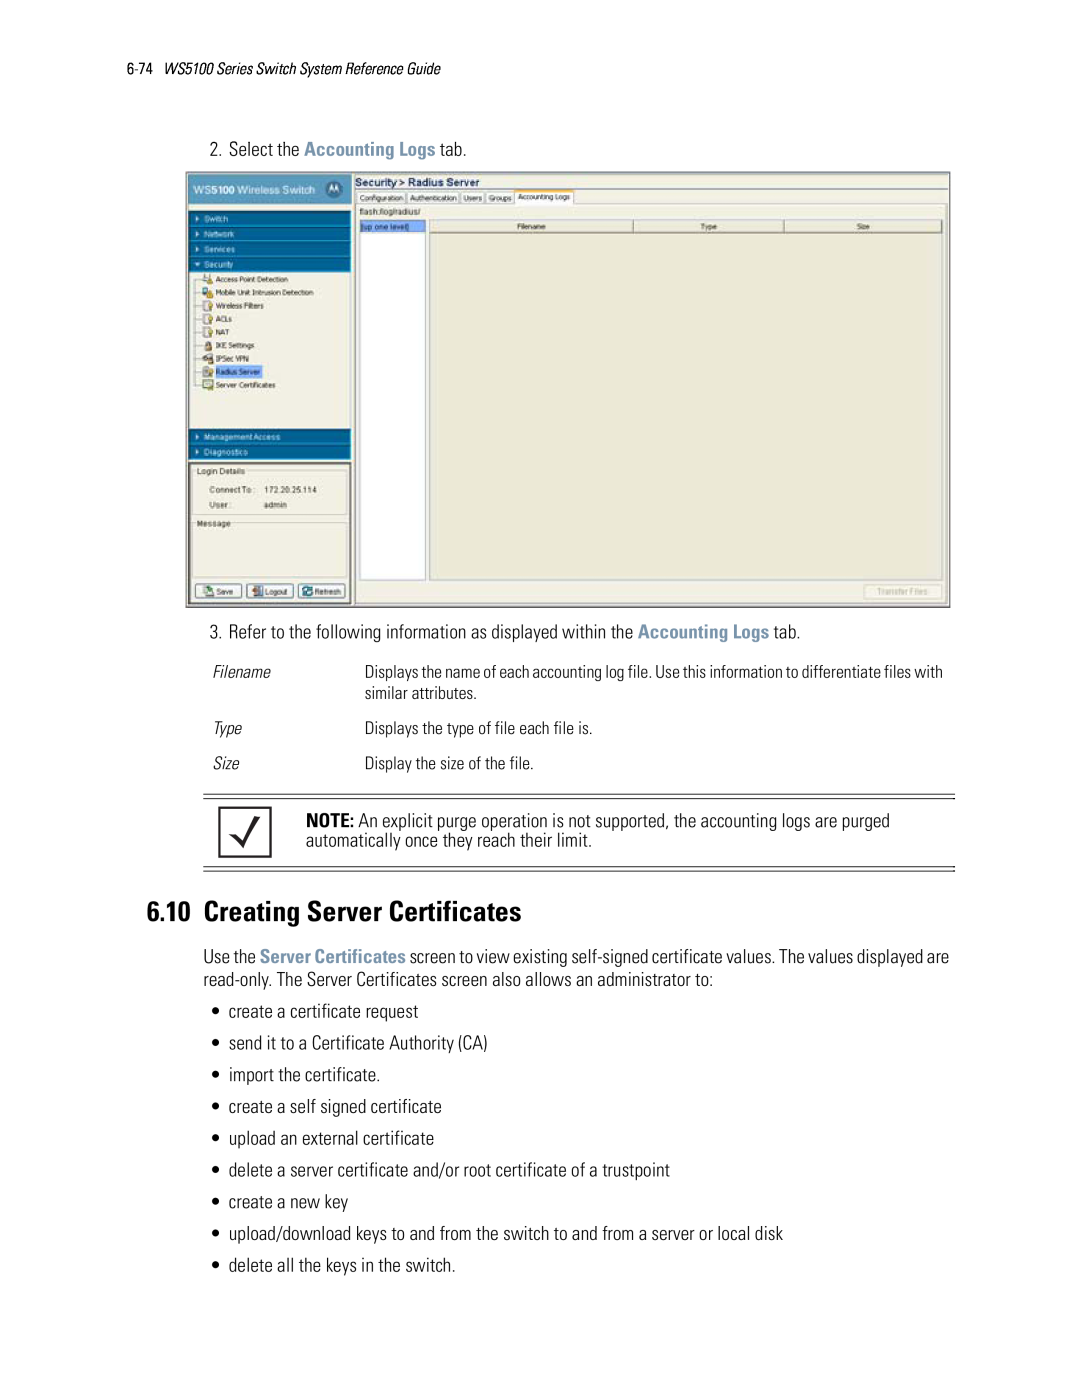 Motorola WS5100 manual Creating Server Certificates, Select the Accounting Logs tab 